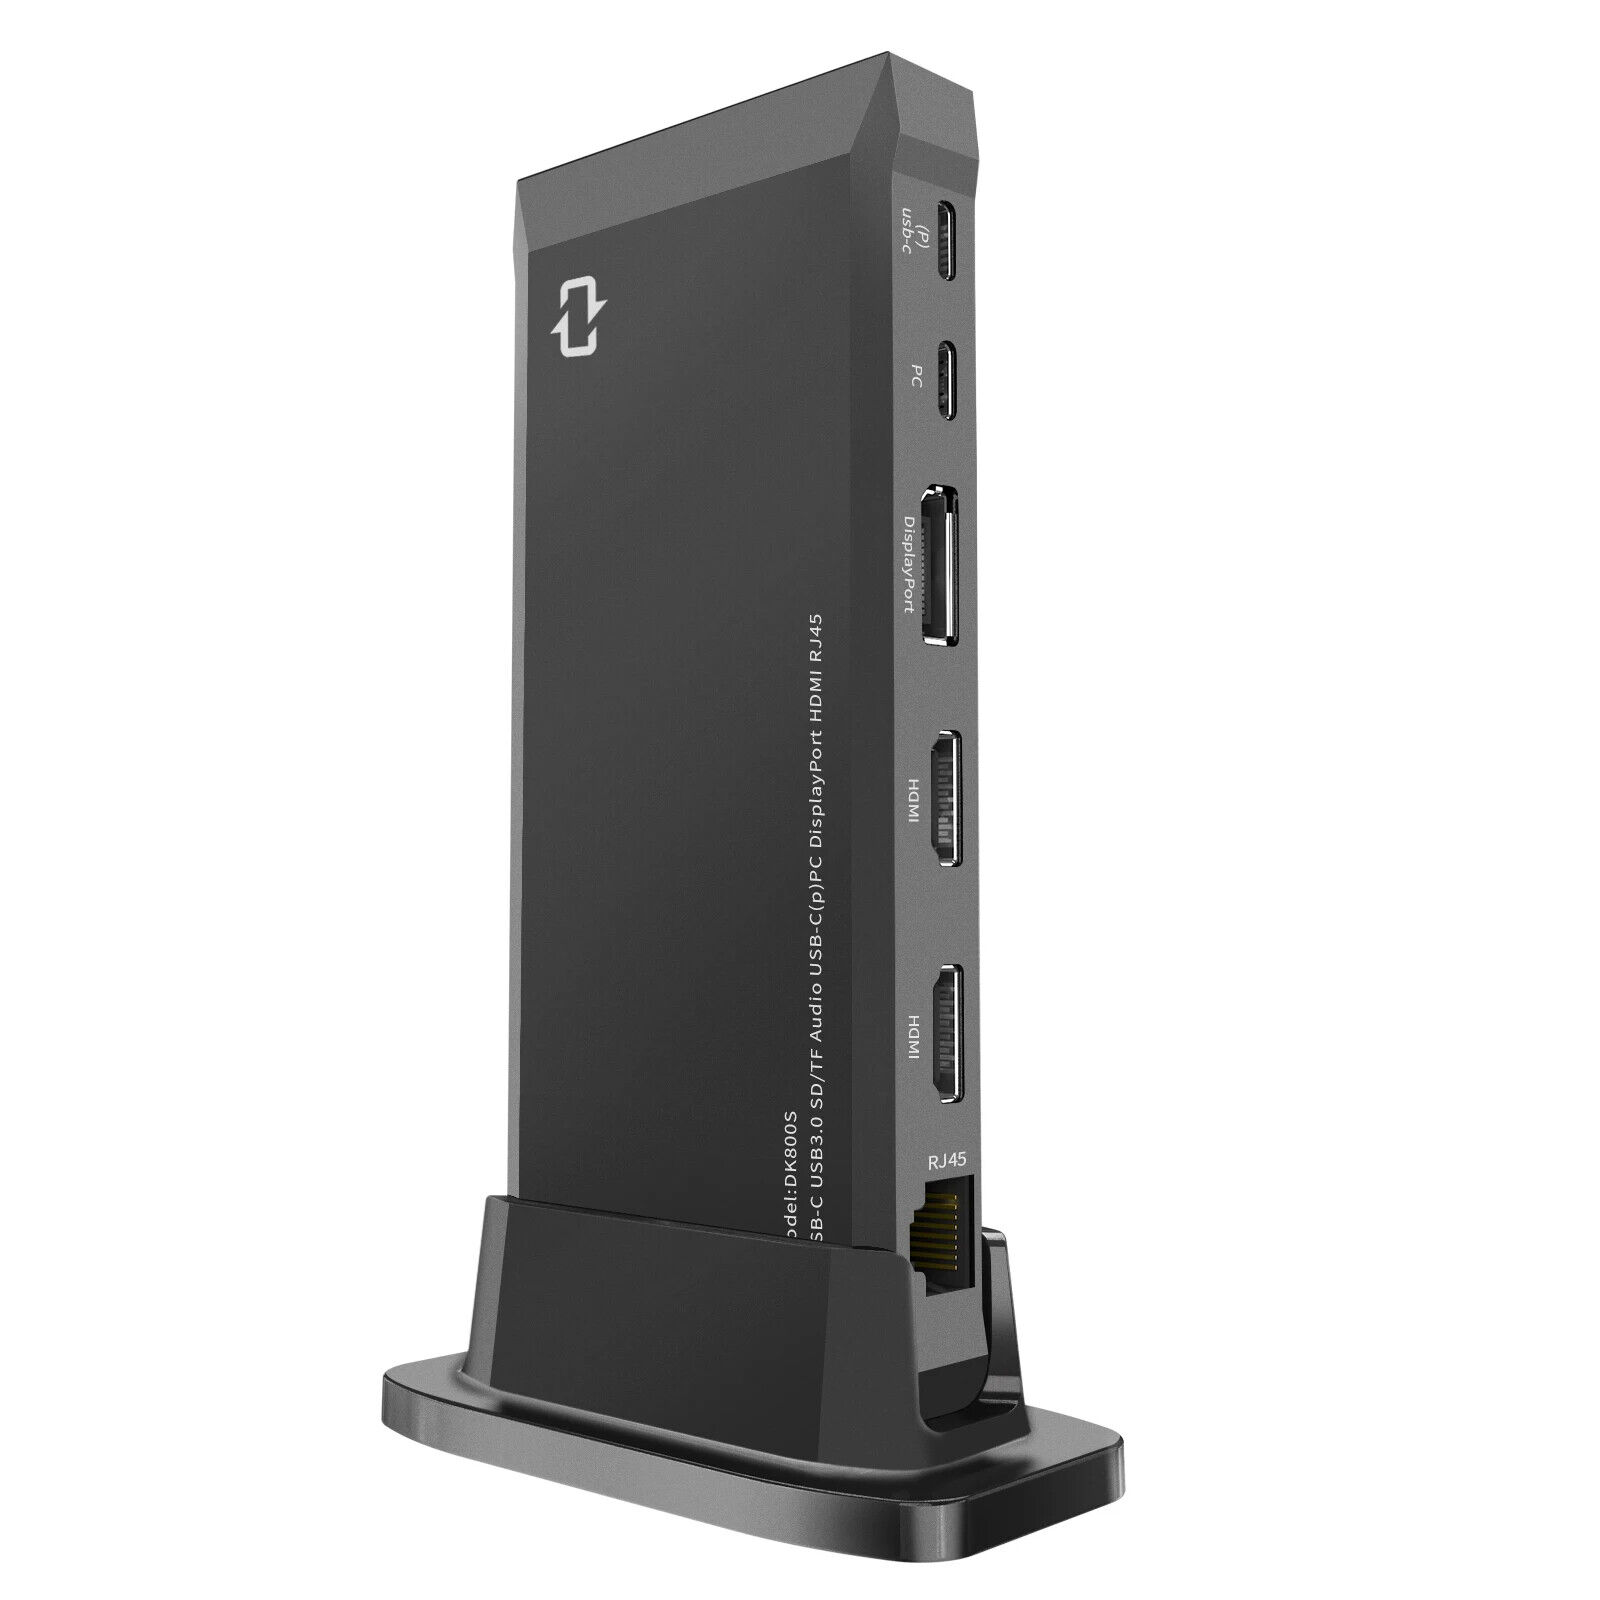 13 in 1 USB C Dock Station 100W Power RJ45 Gigabit Ethernet DP 4K 30Hz Adapters